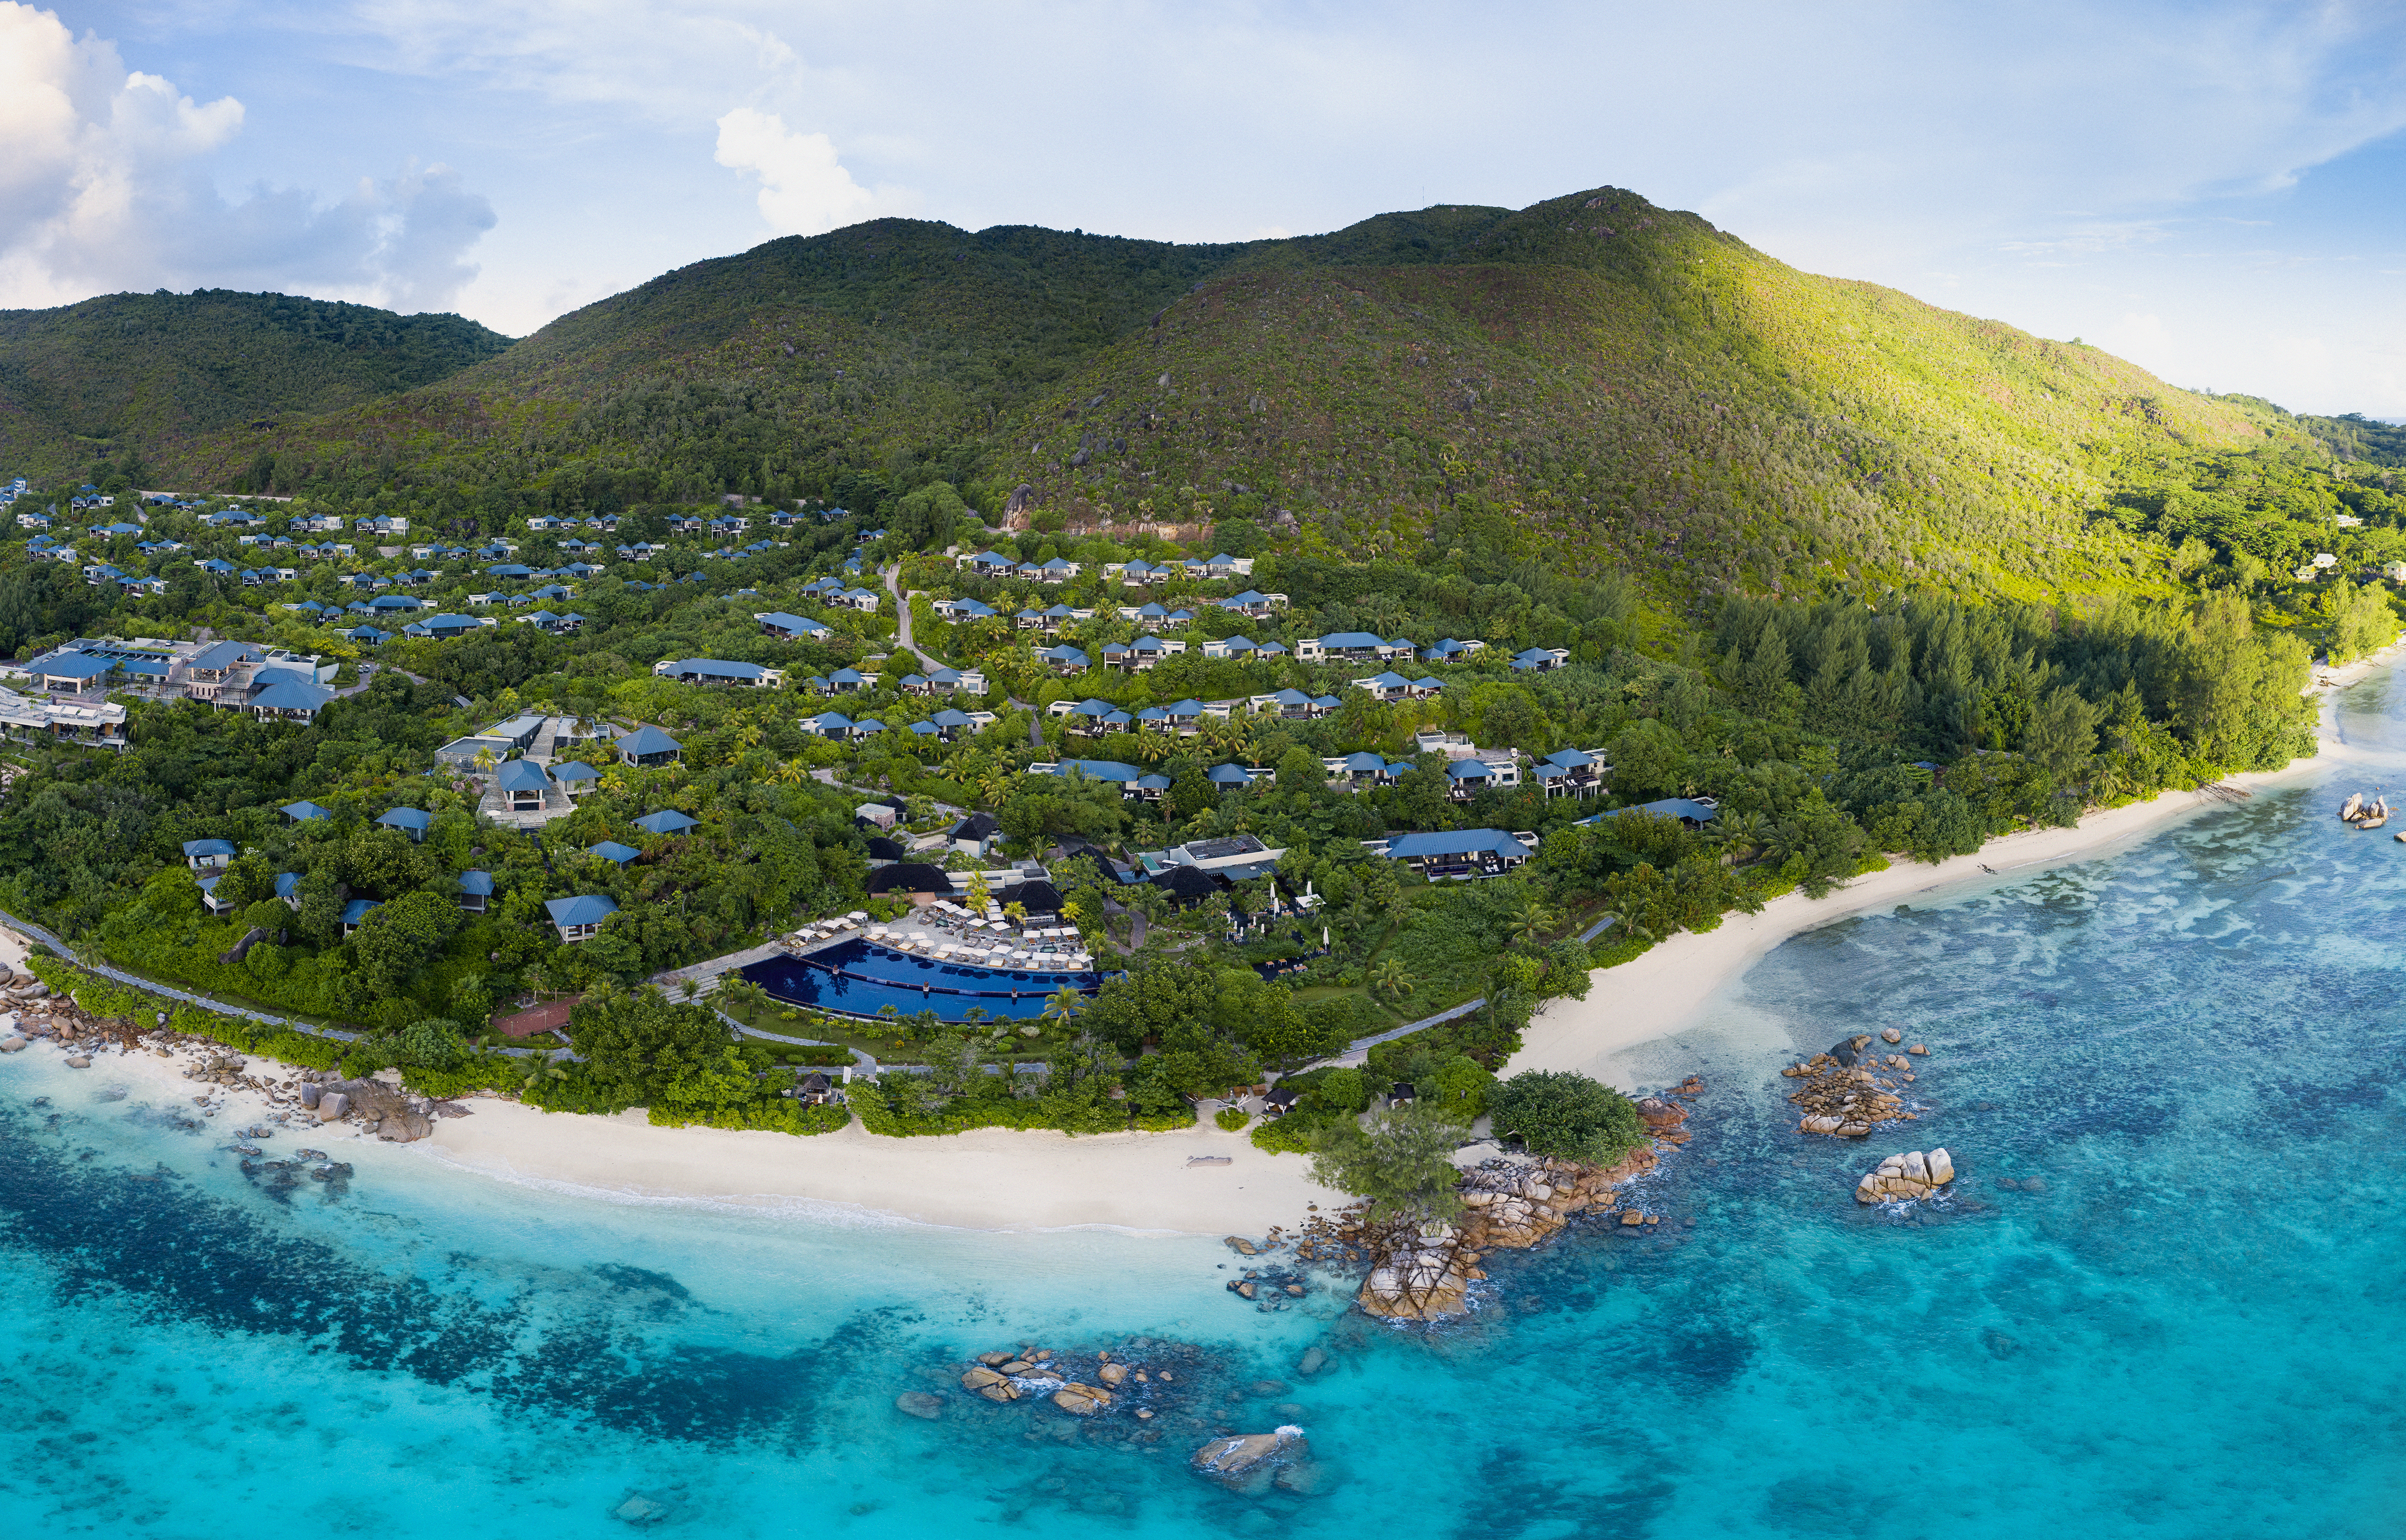 O island. Остров Праслин. Сейшельские острова Праслин. Raffles Seychelles (Сейшелы, Праслин). Ансе Лацио, остров Праслен, Сейшелы.